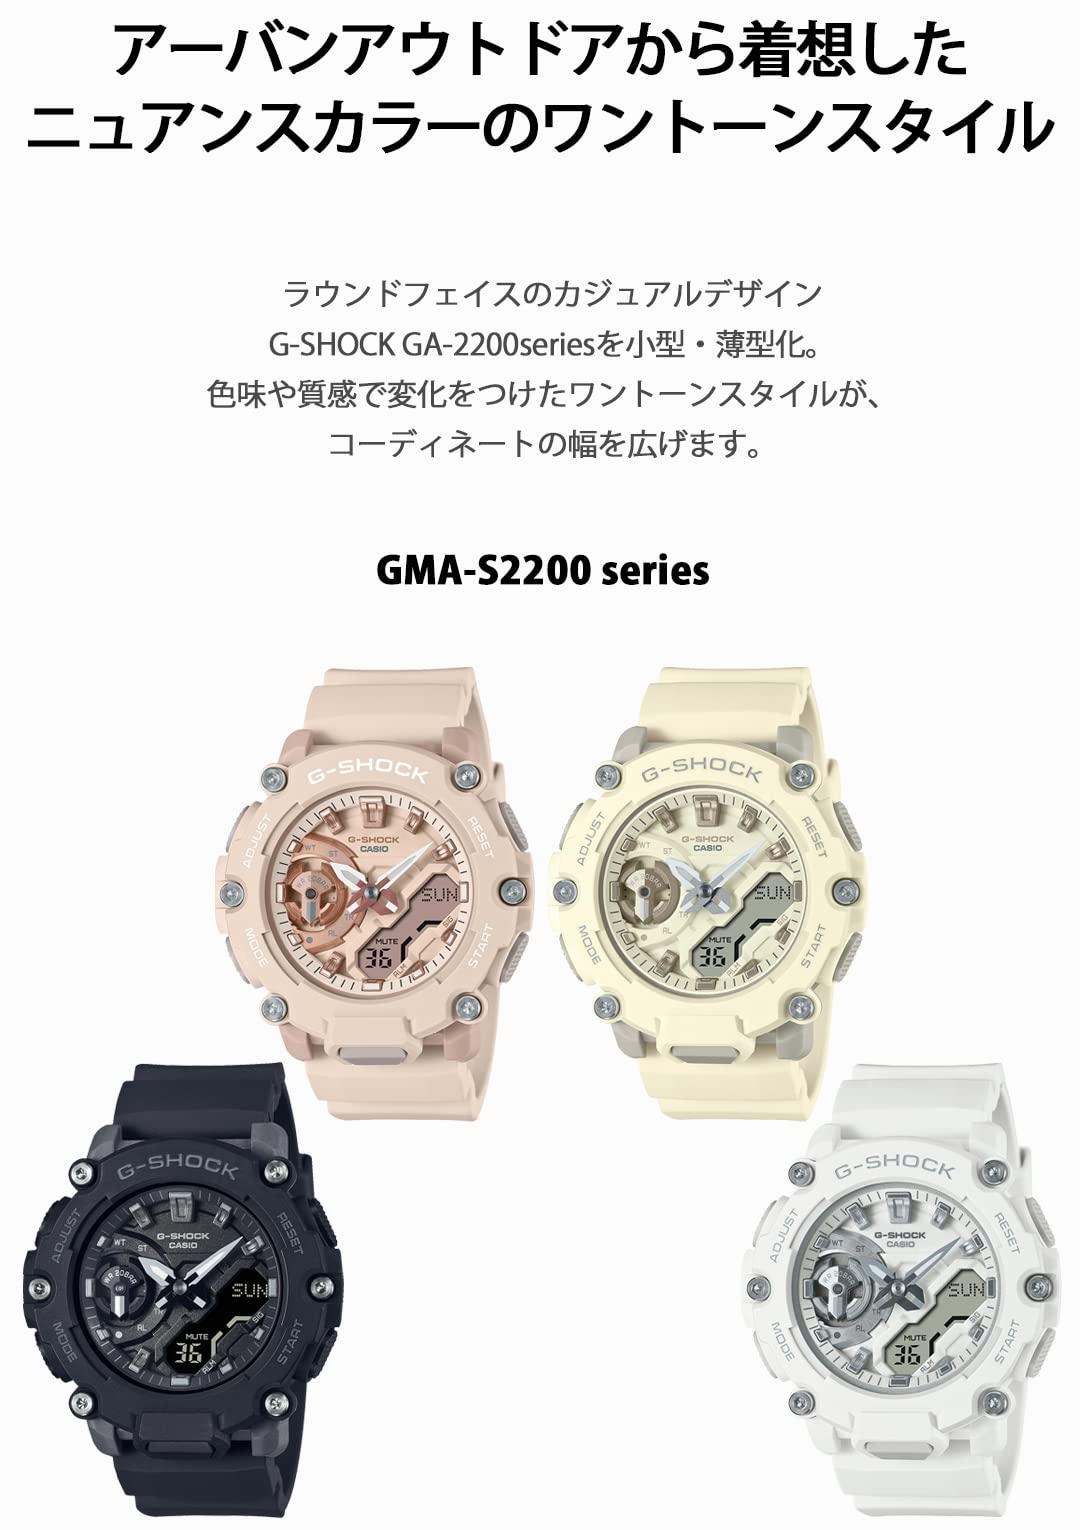 Buy Casio GMA-S2200-7AJF G-Shock Watch, Mid-Size Model, White